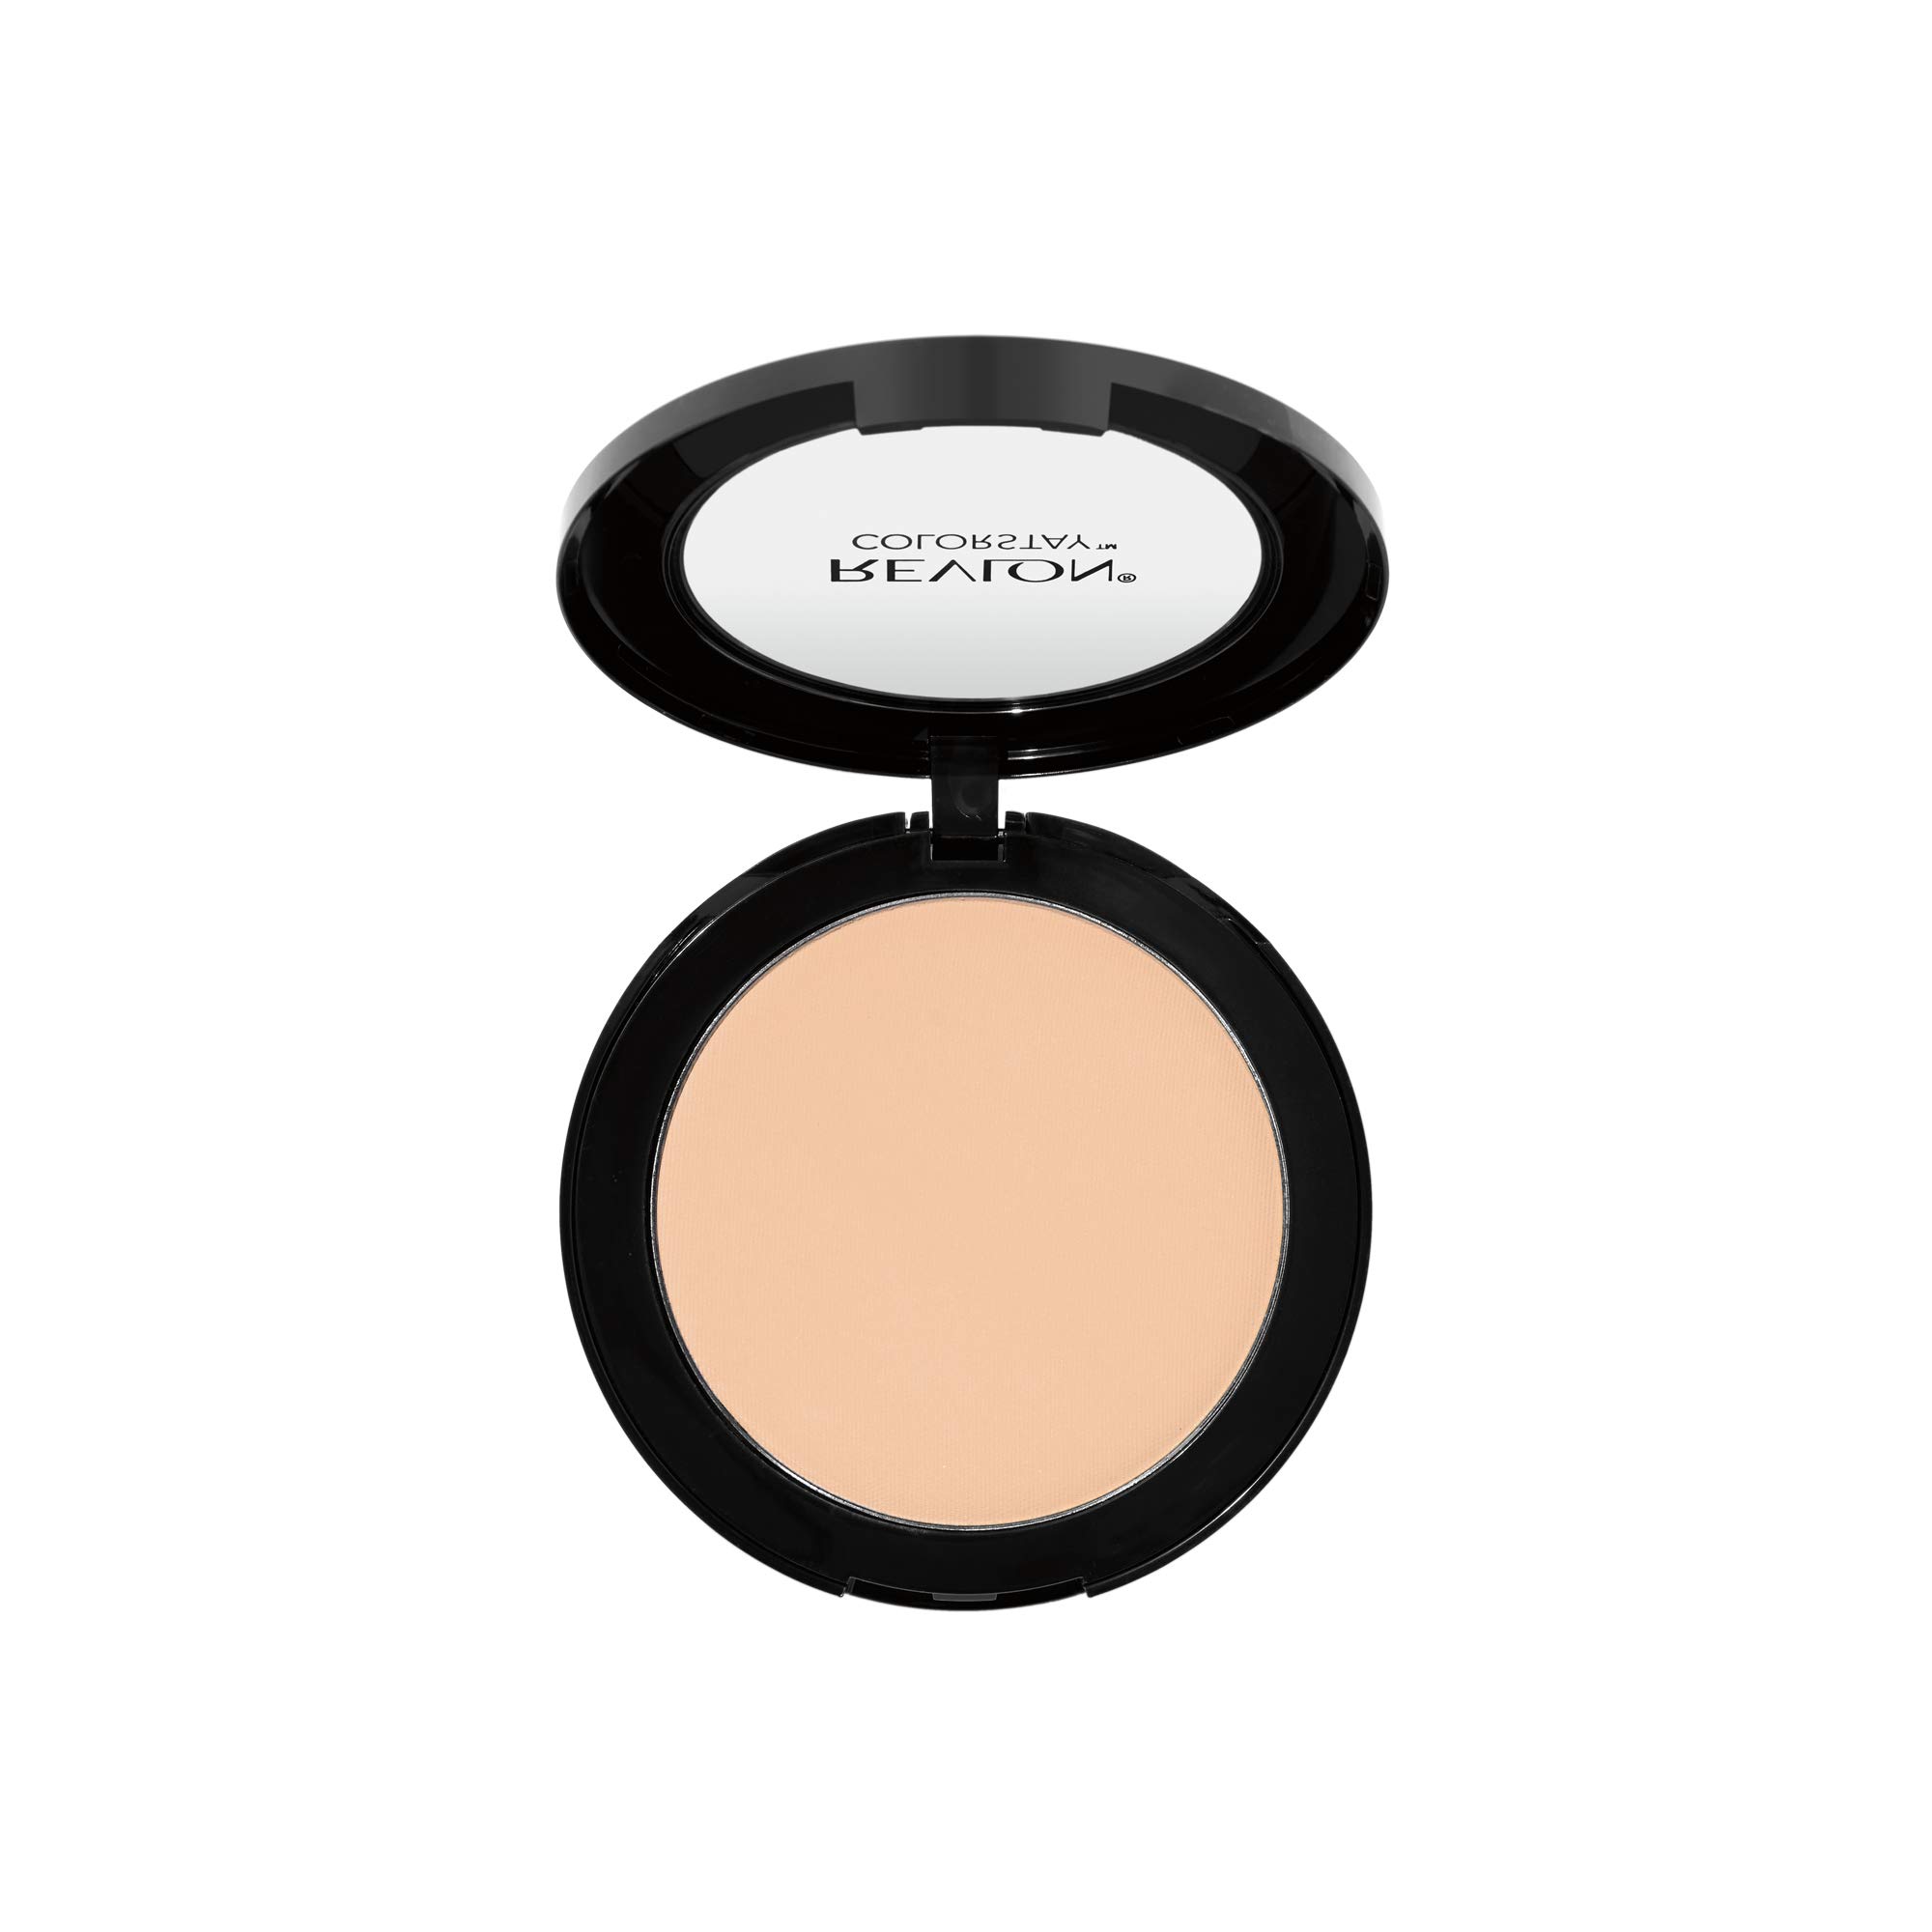 Revlon Face Powder, ColorStay 16 Hour Face Makeup, Longwear Medium- Full Coverage with Flawless Finish, Shine & Oil Free, 830 Light Medium, 2.4 Oz